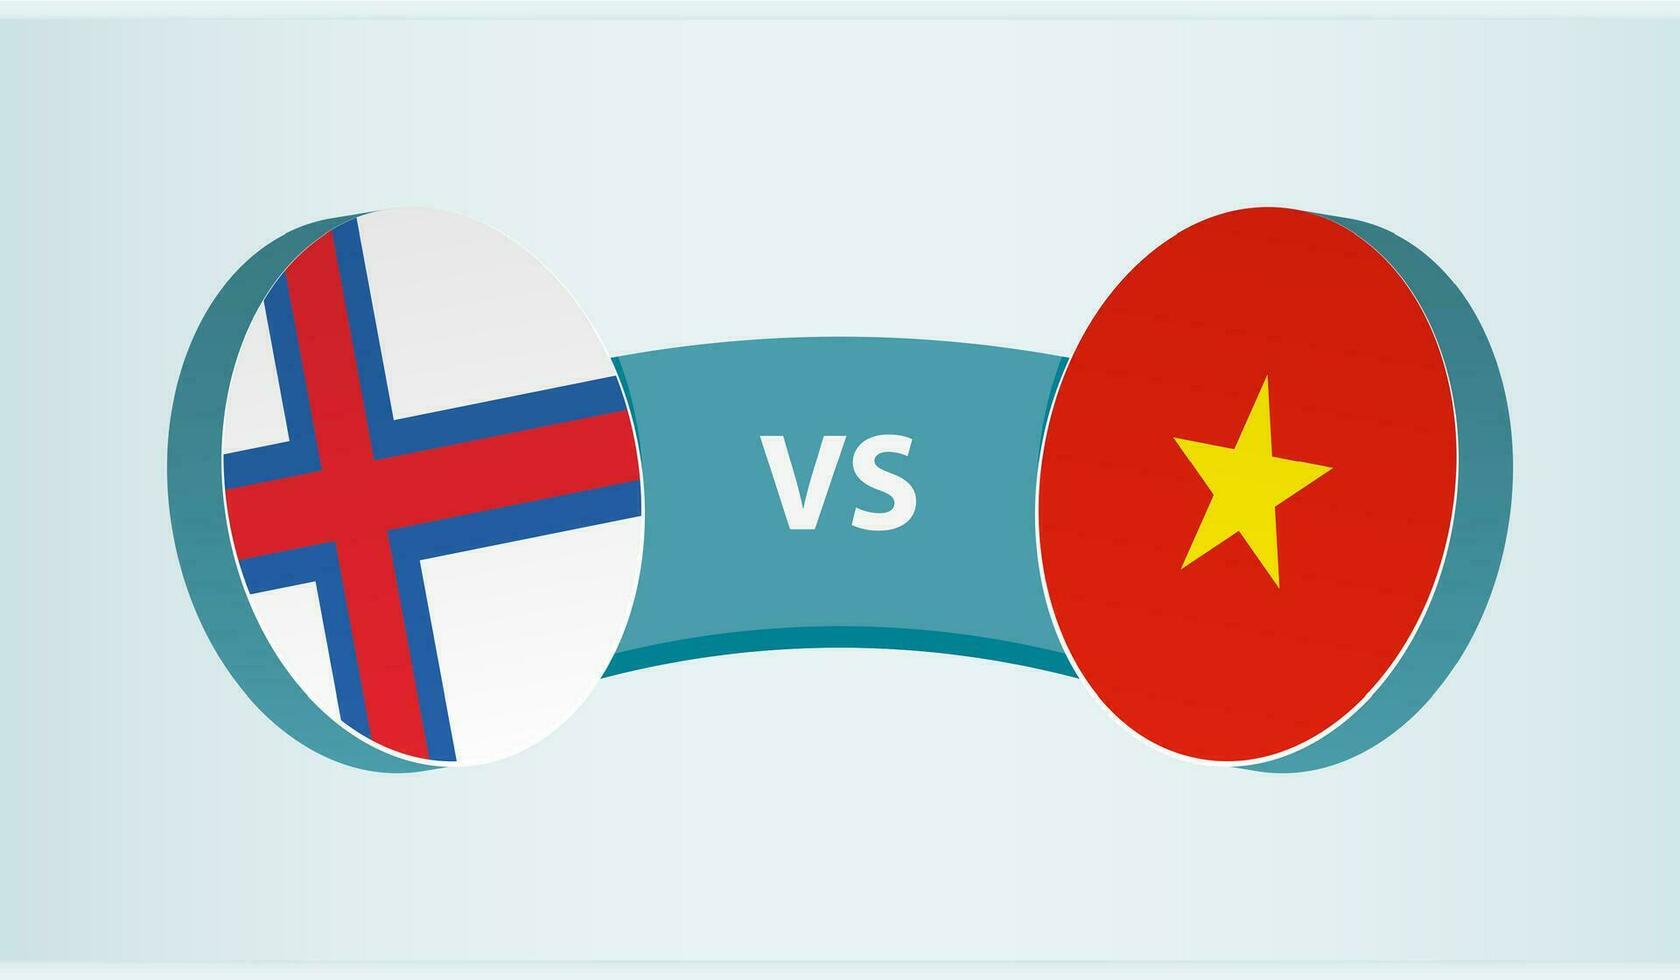 Faroe Islands versus Vietnam, team sports competition concept. vector